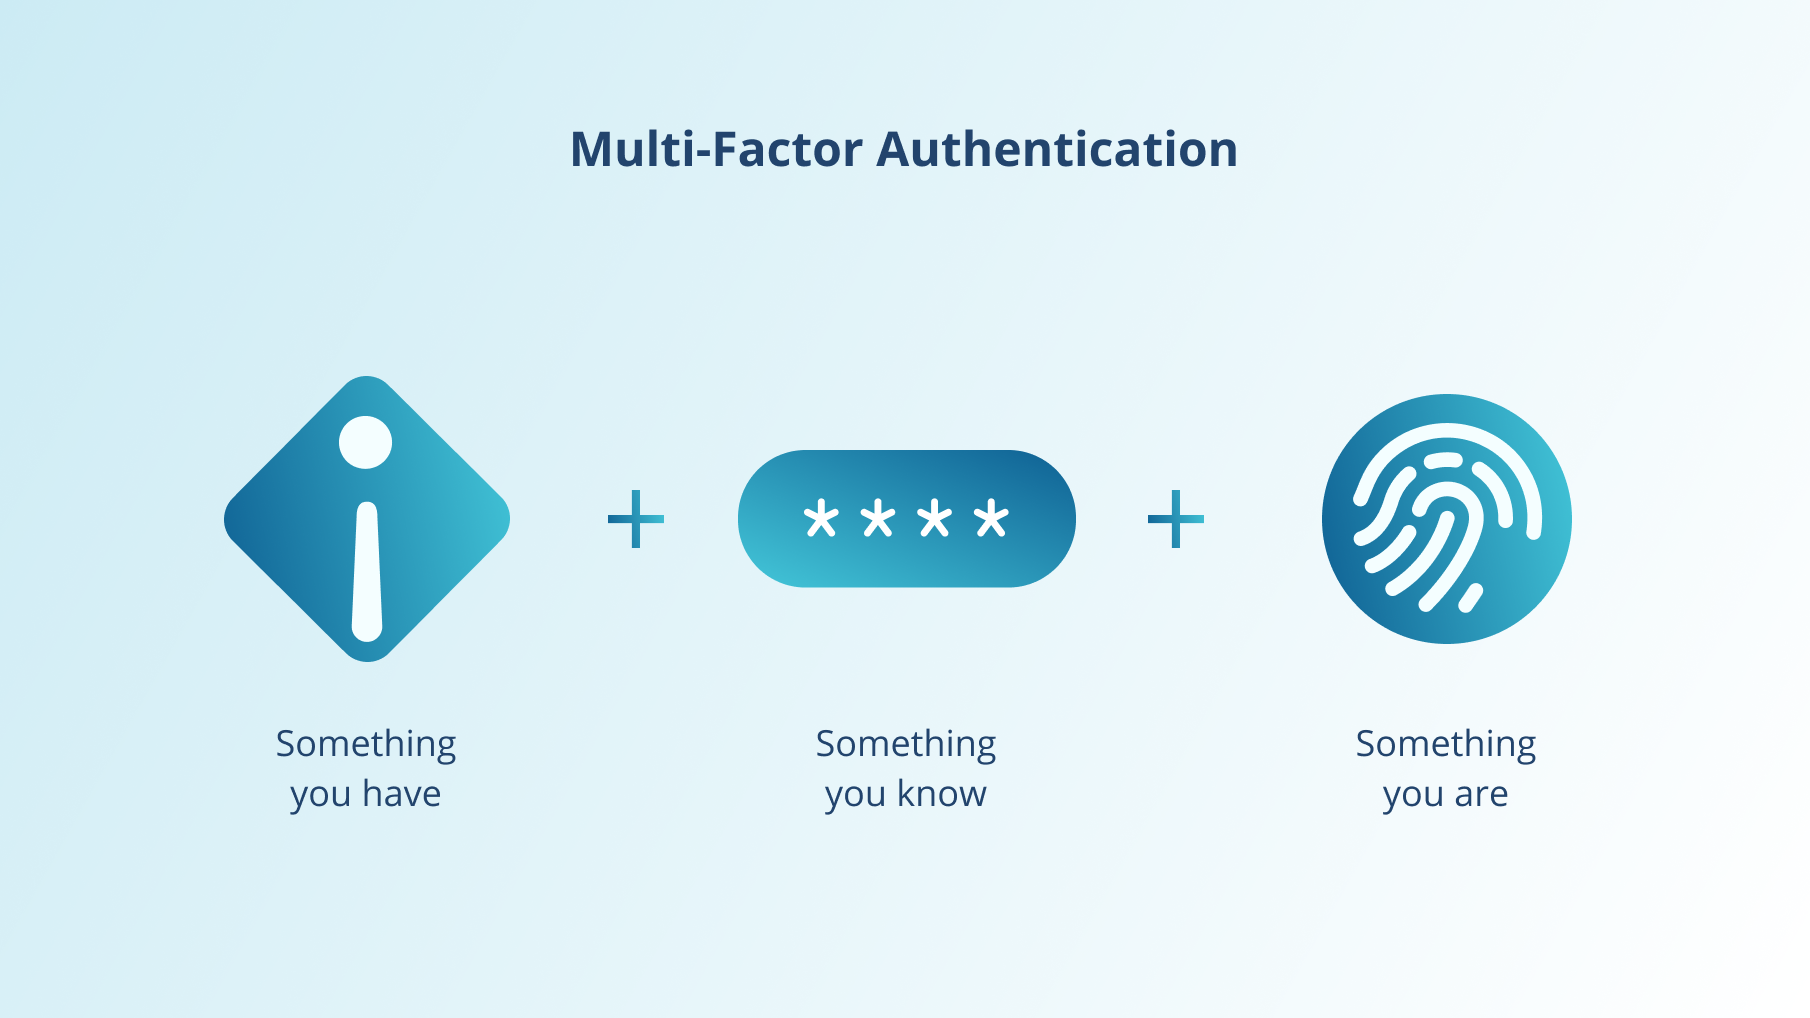 Methods of multi-factor authentication: something you have, something you know, something you are